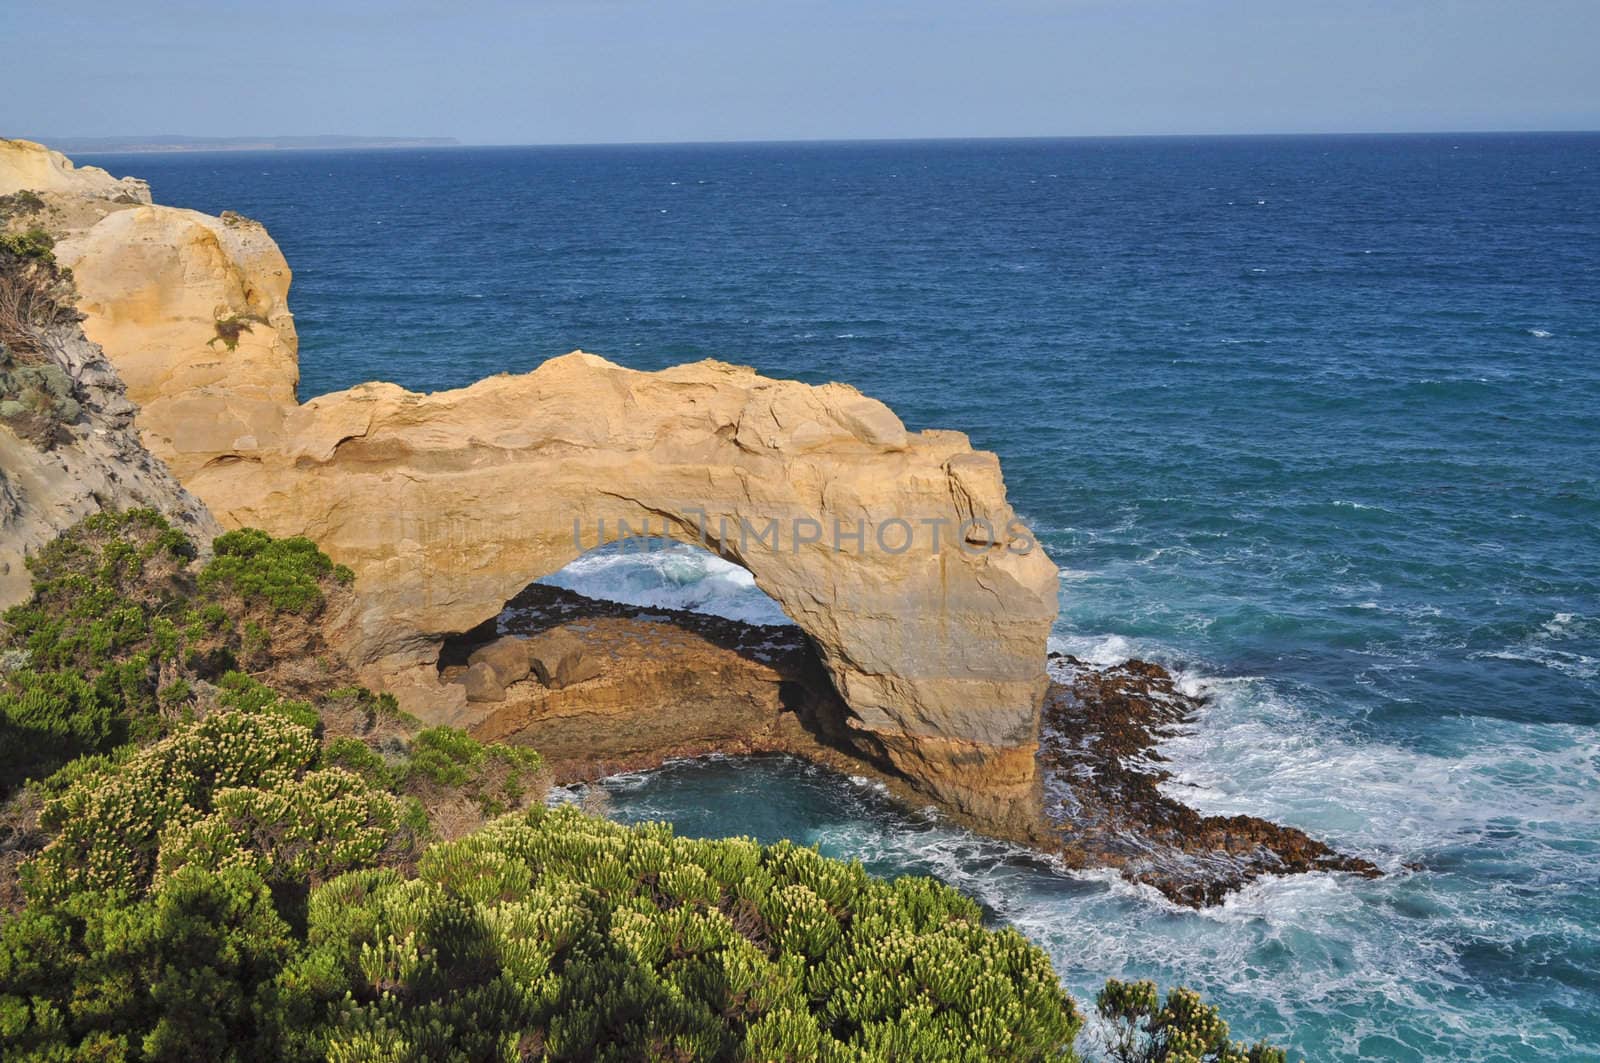 Stone Arch. Great Ocean Road, Australia by dimkadimon